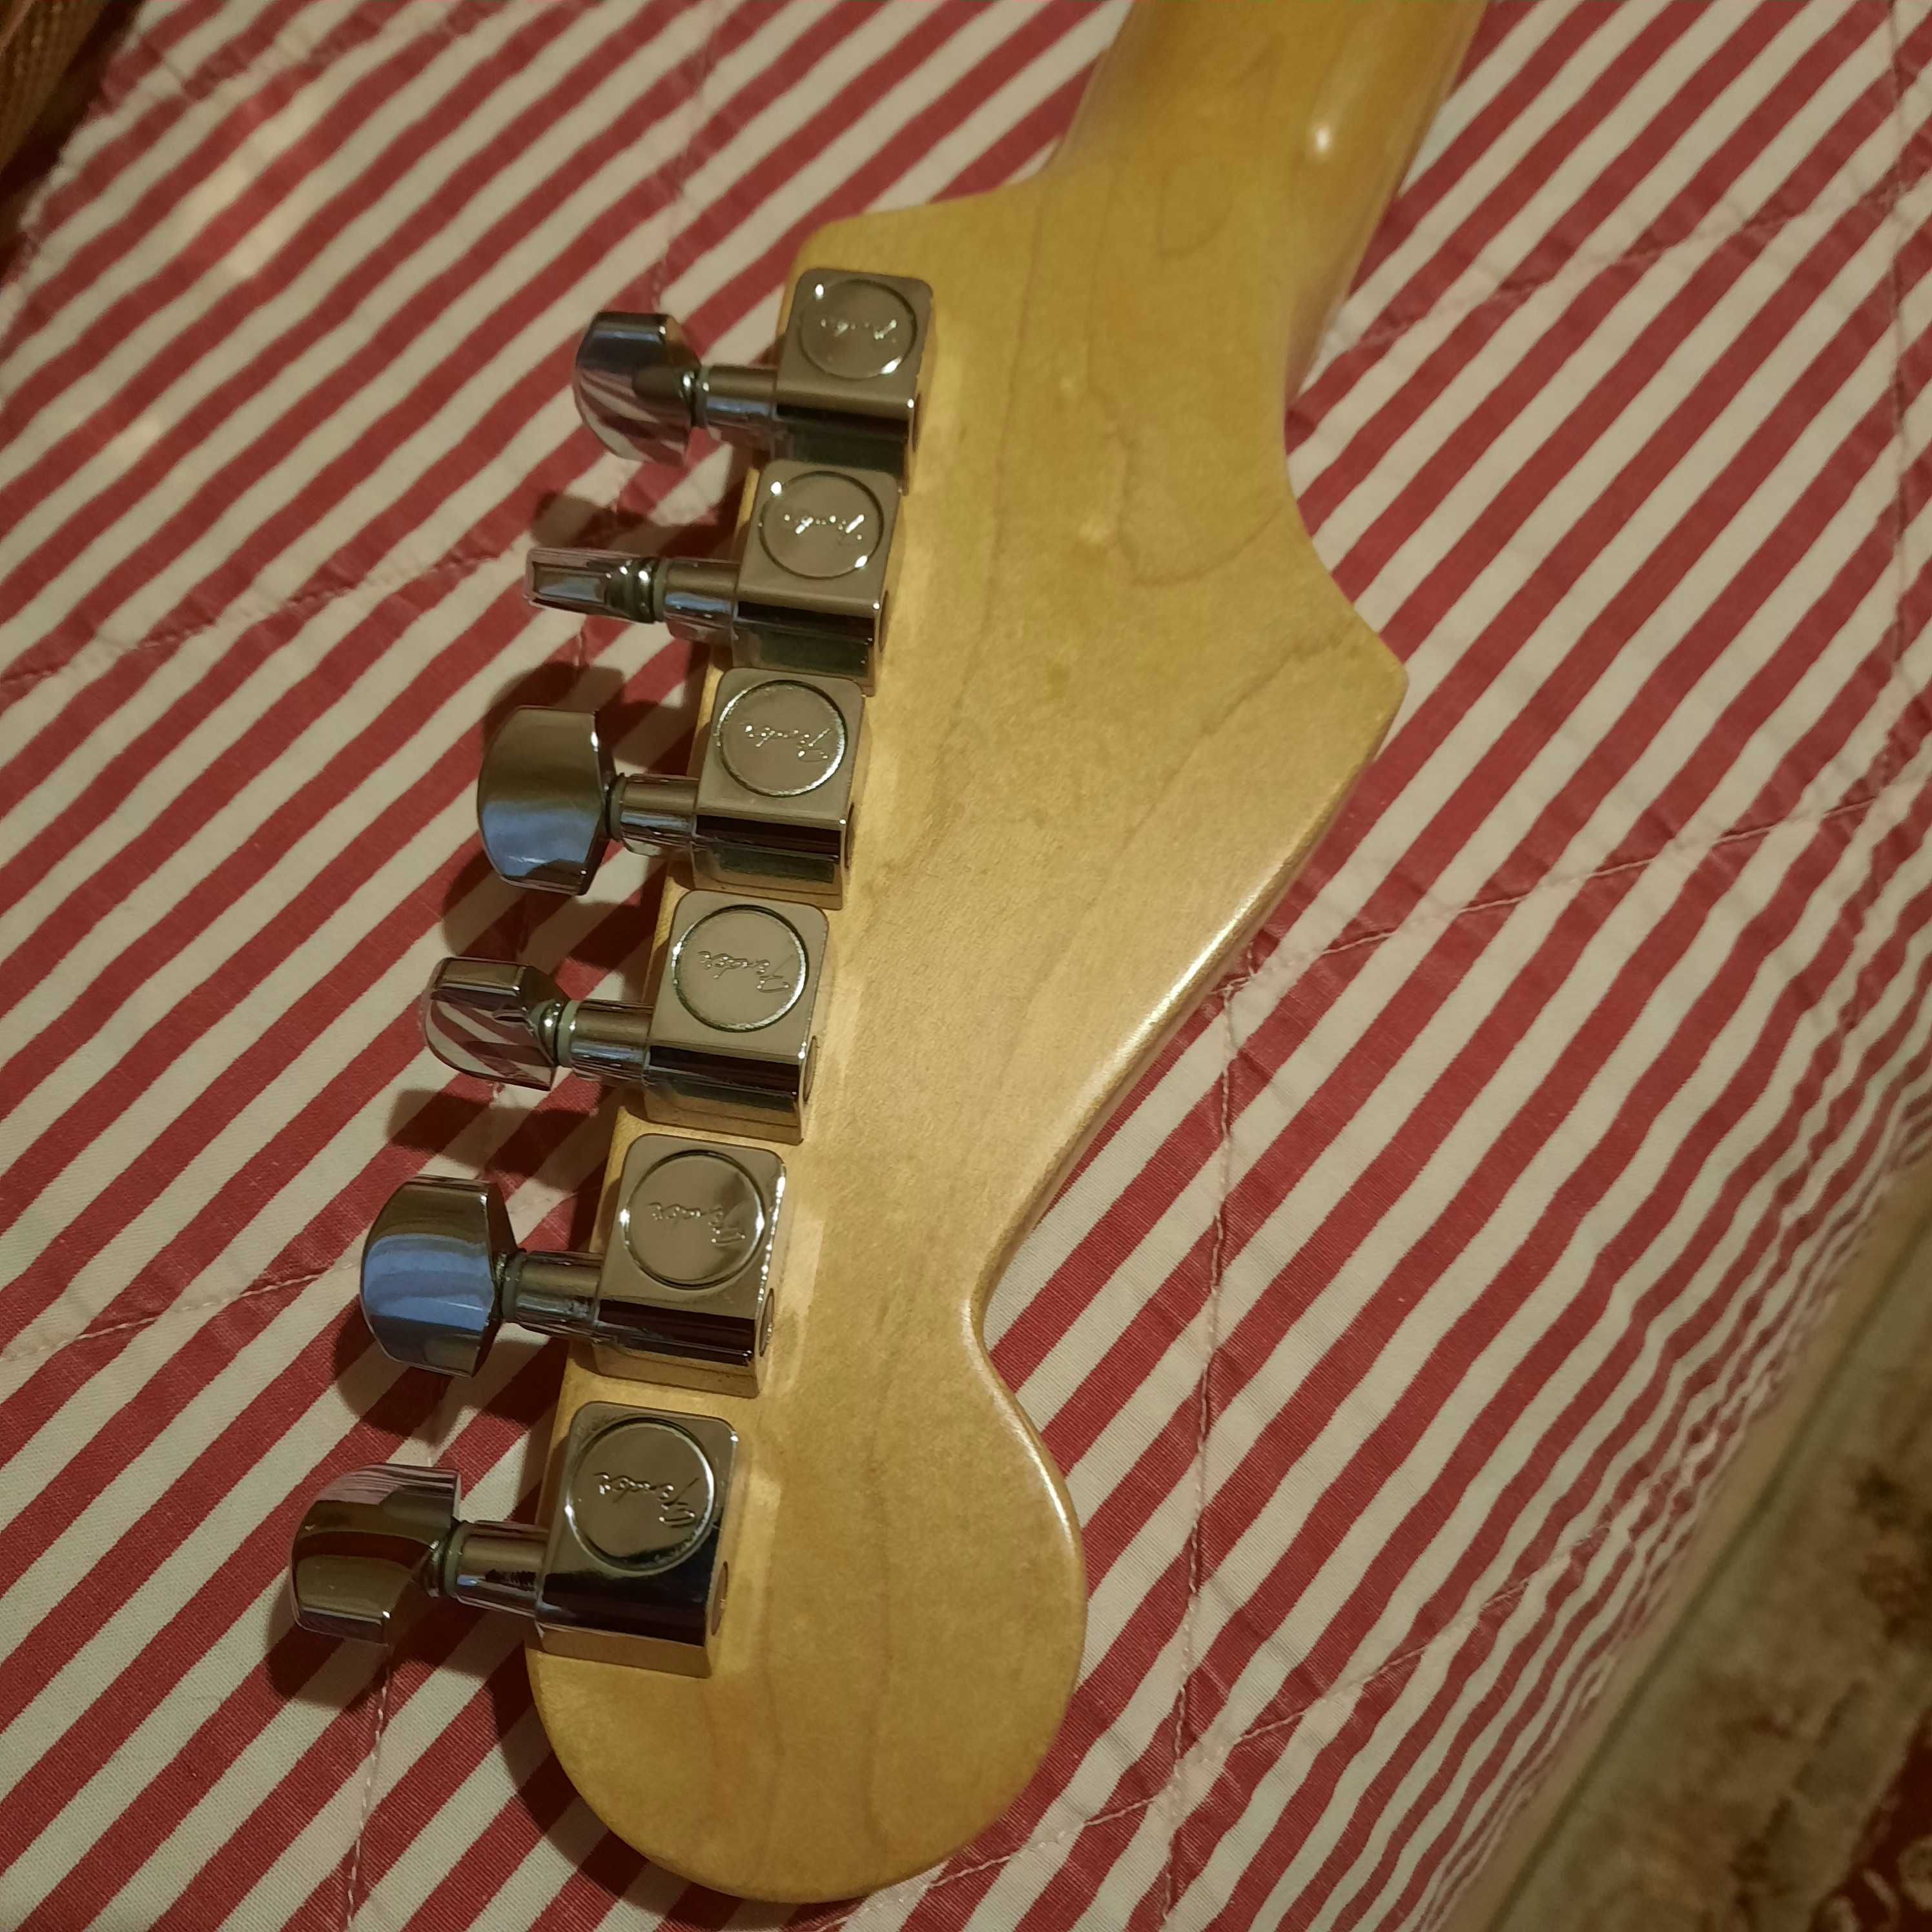 Fender Stratocaster MIM